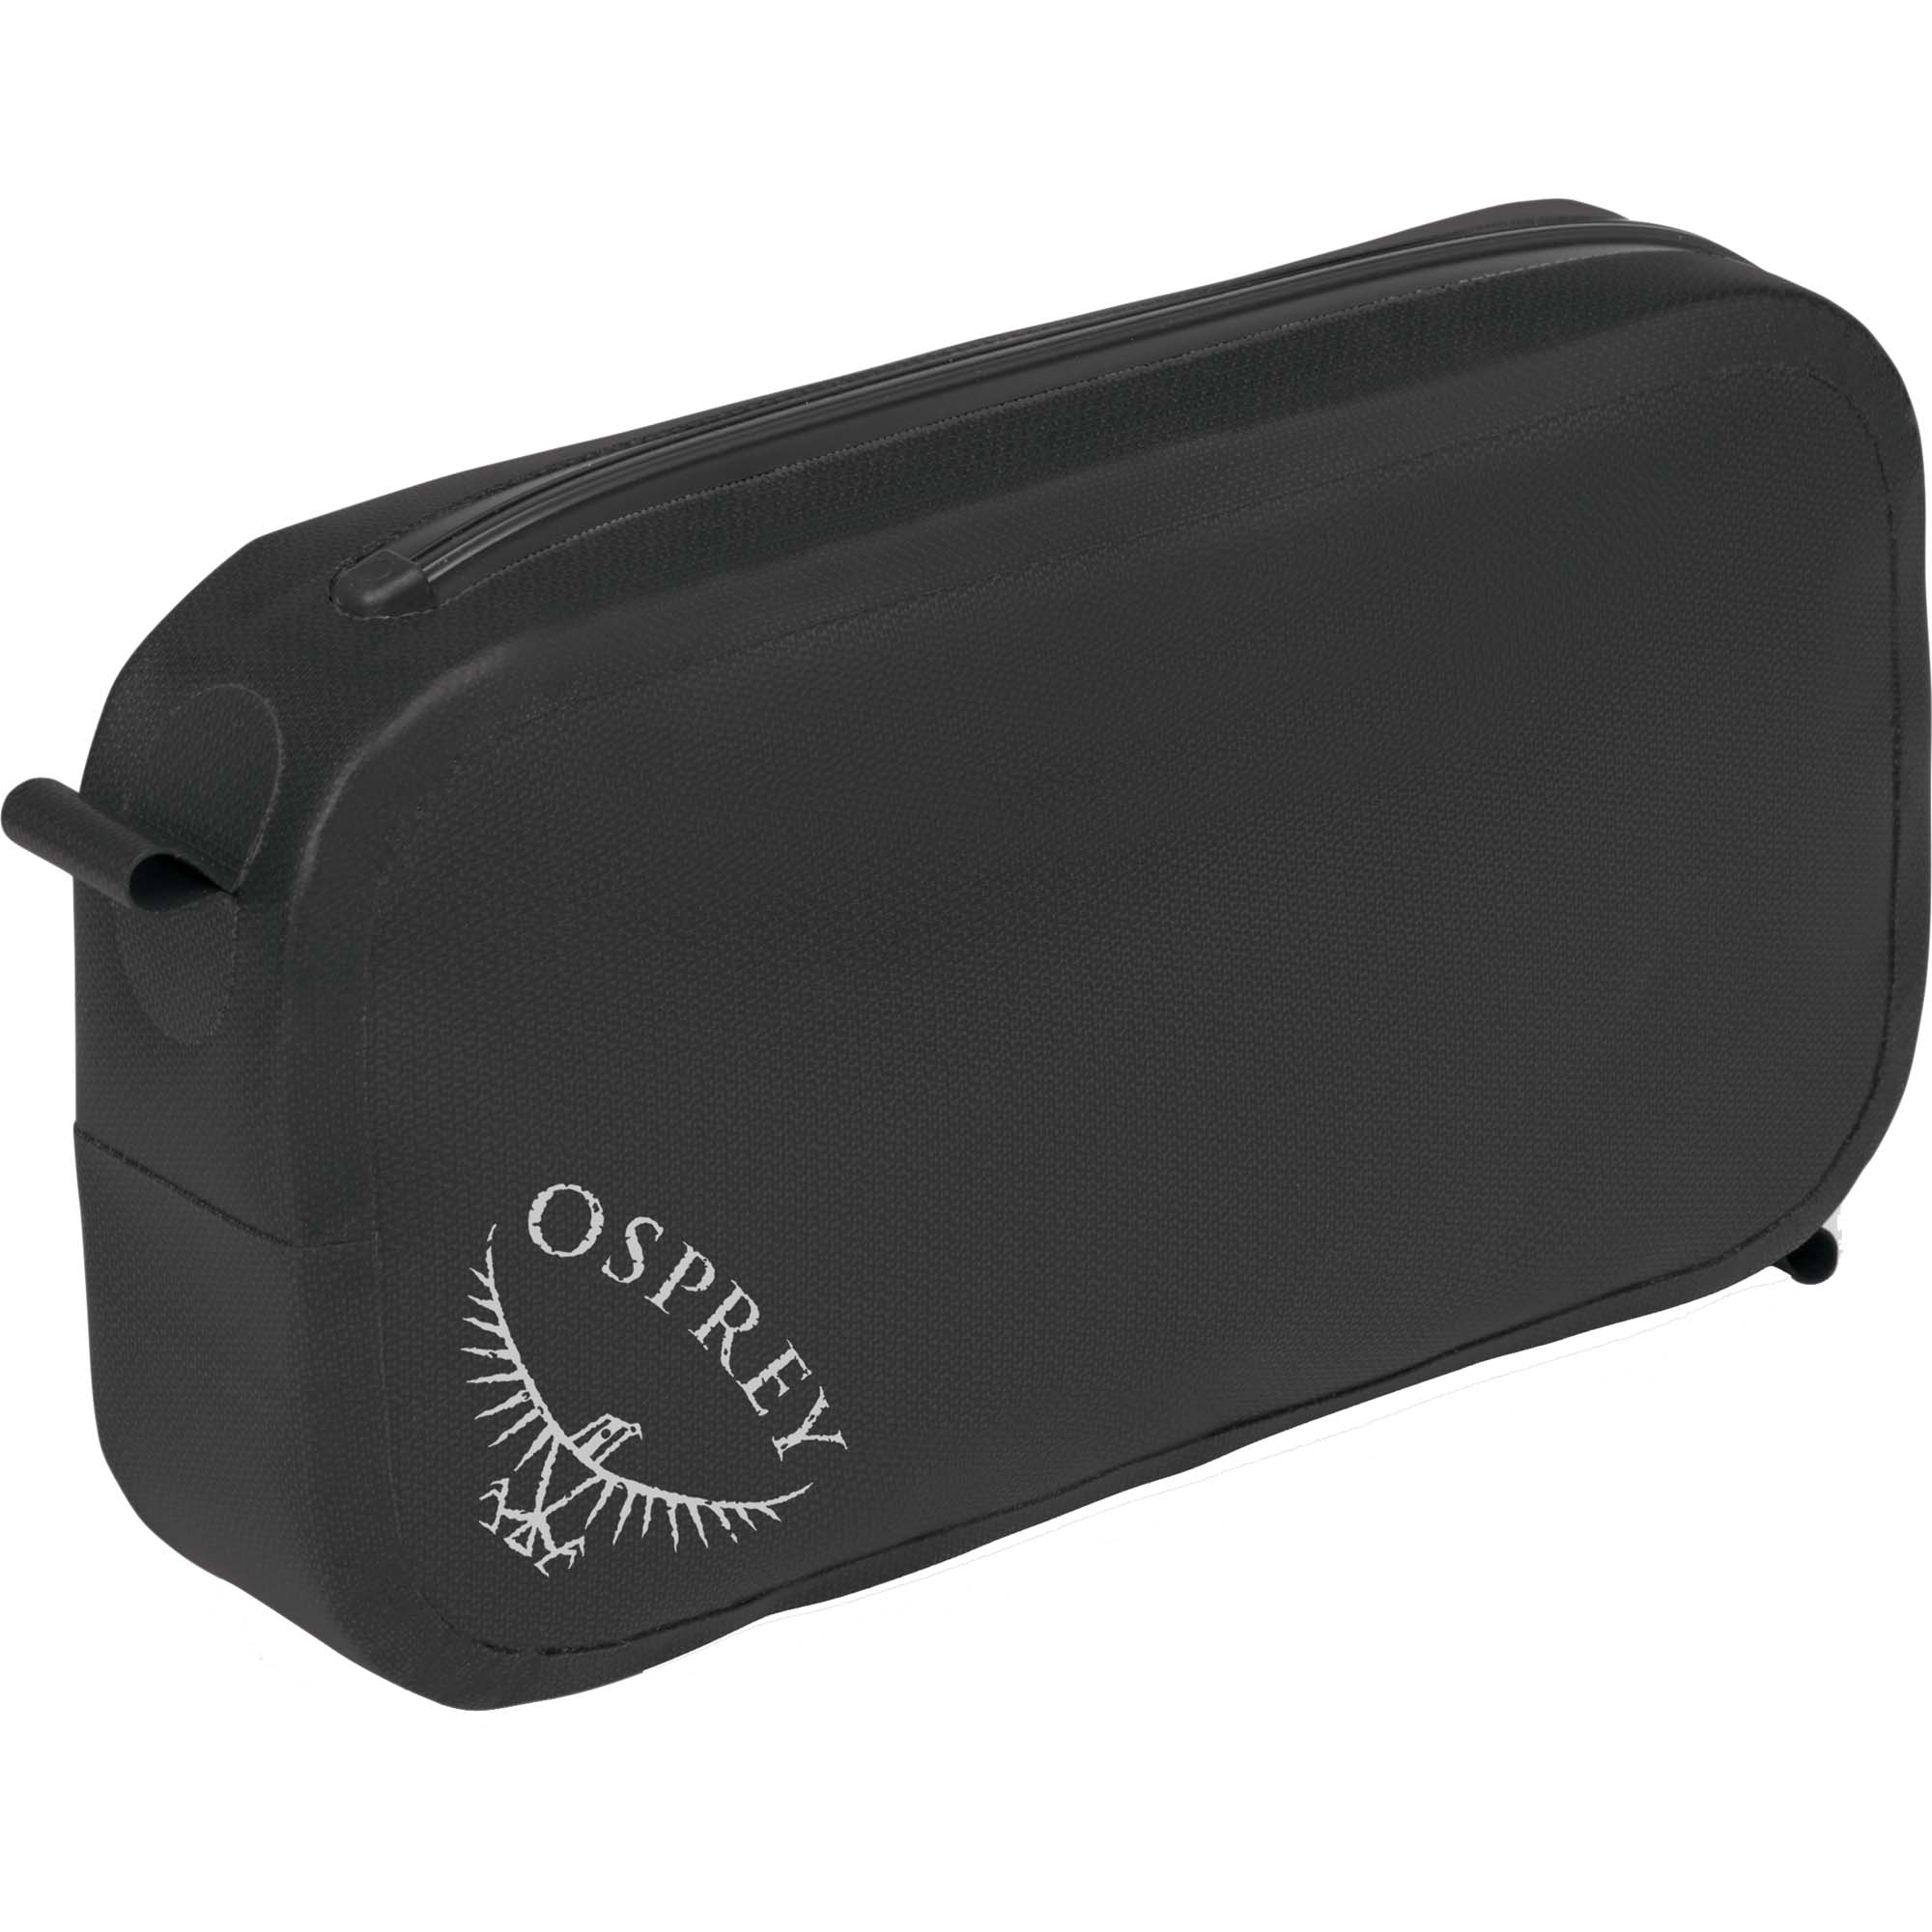 Osprey Pack Pocket Waterproof Add-On Storage